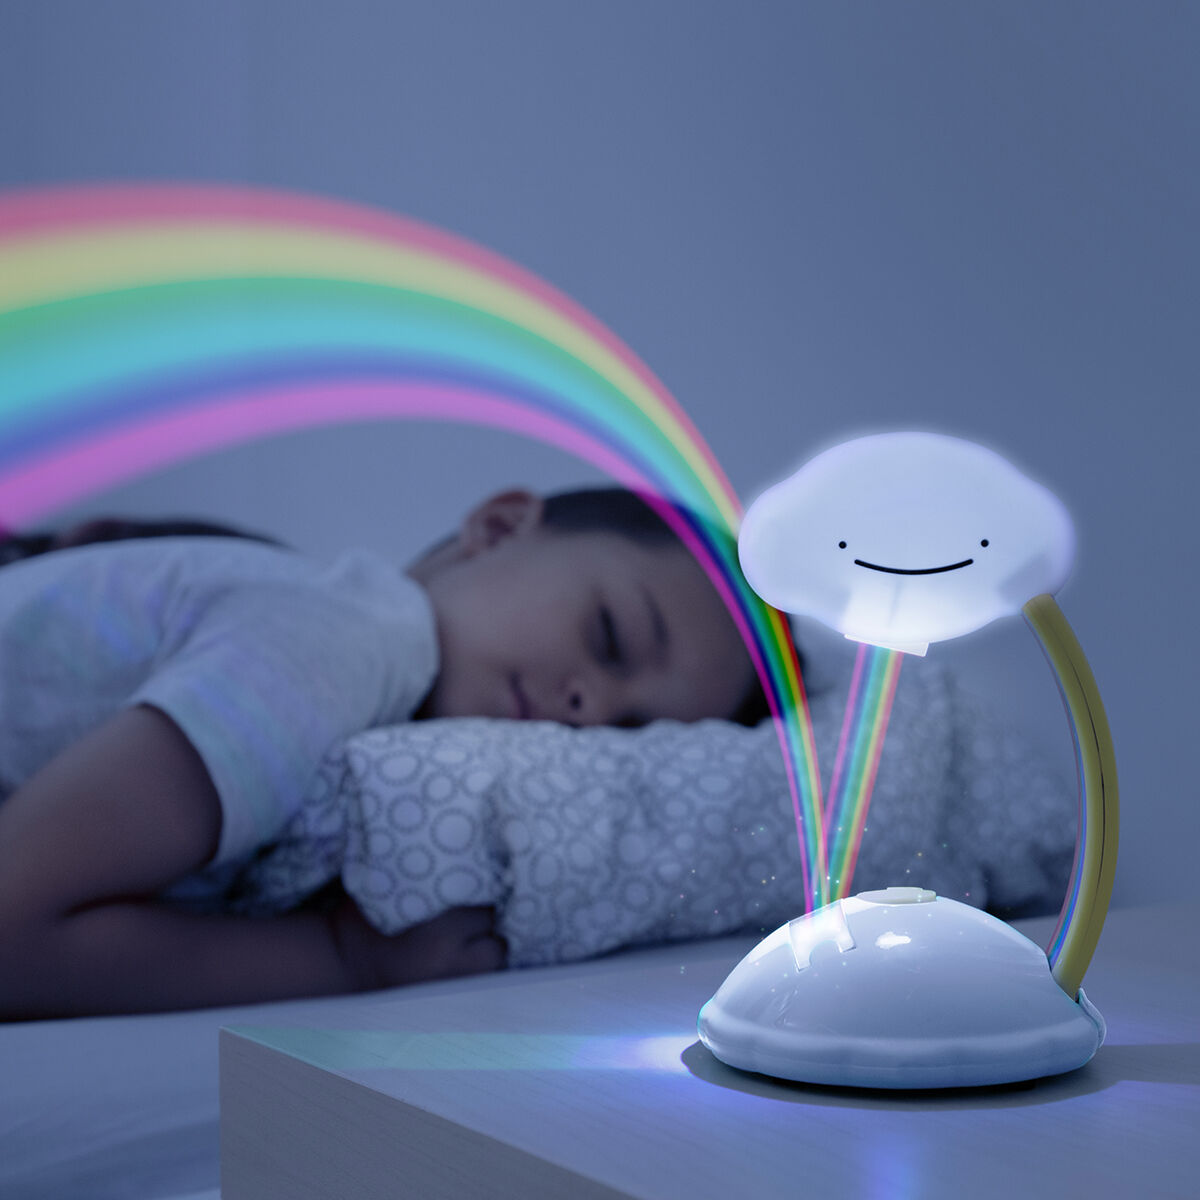 Proiettore LED Nuvola Arcobaleno Libow InnovaGoods